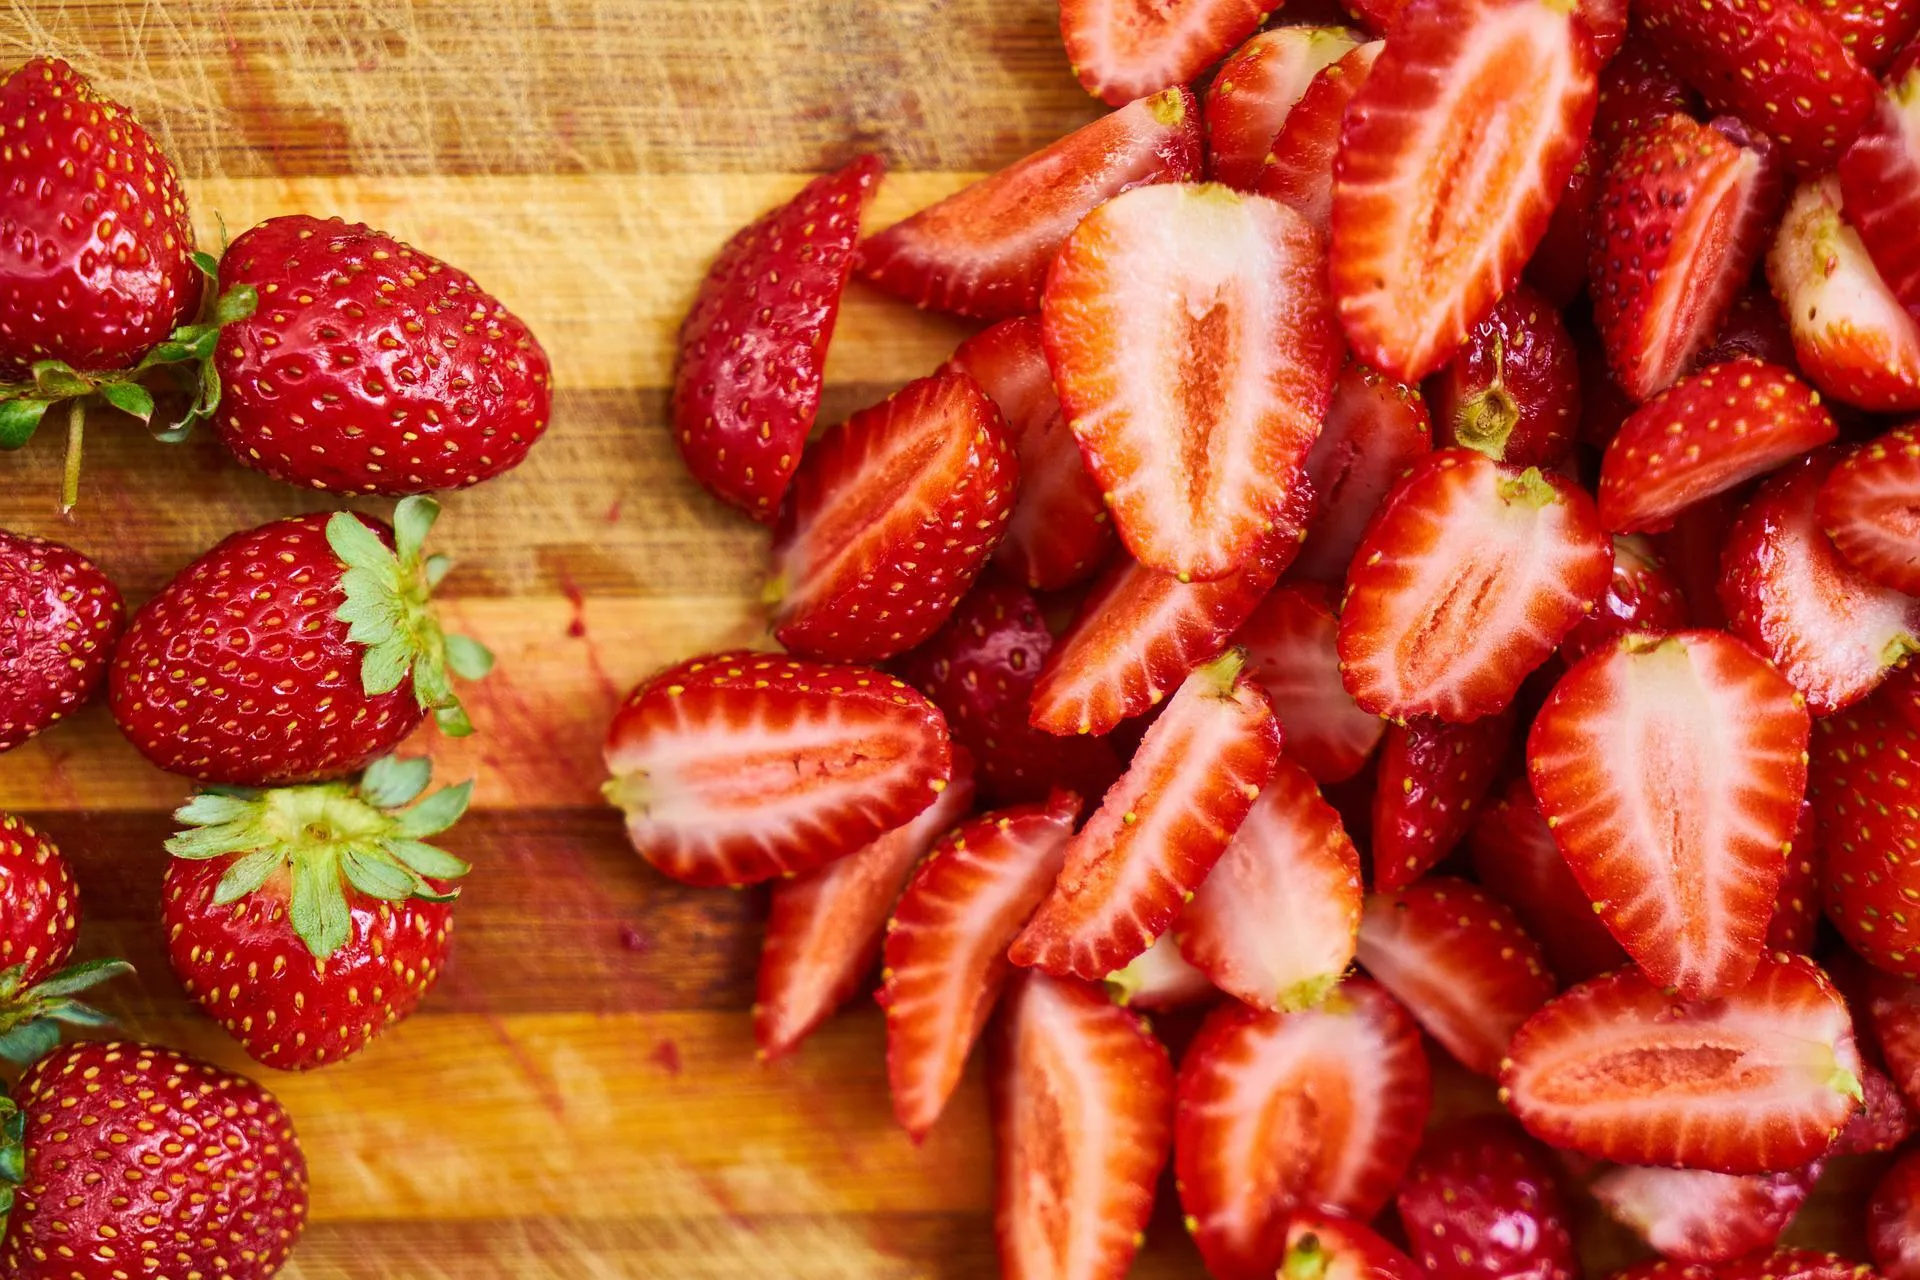 Do not grind strawberries for jam